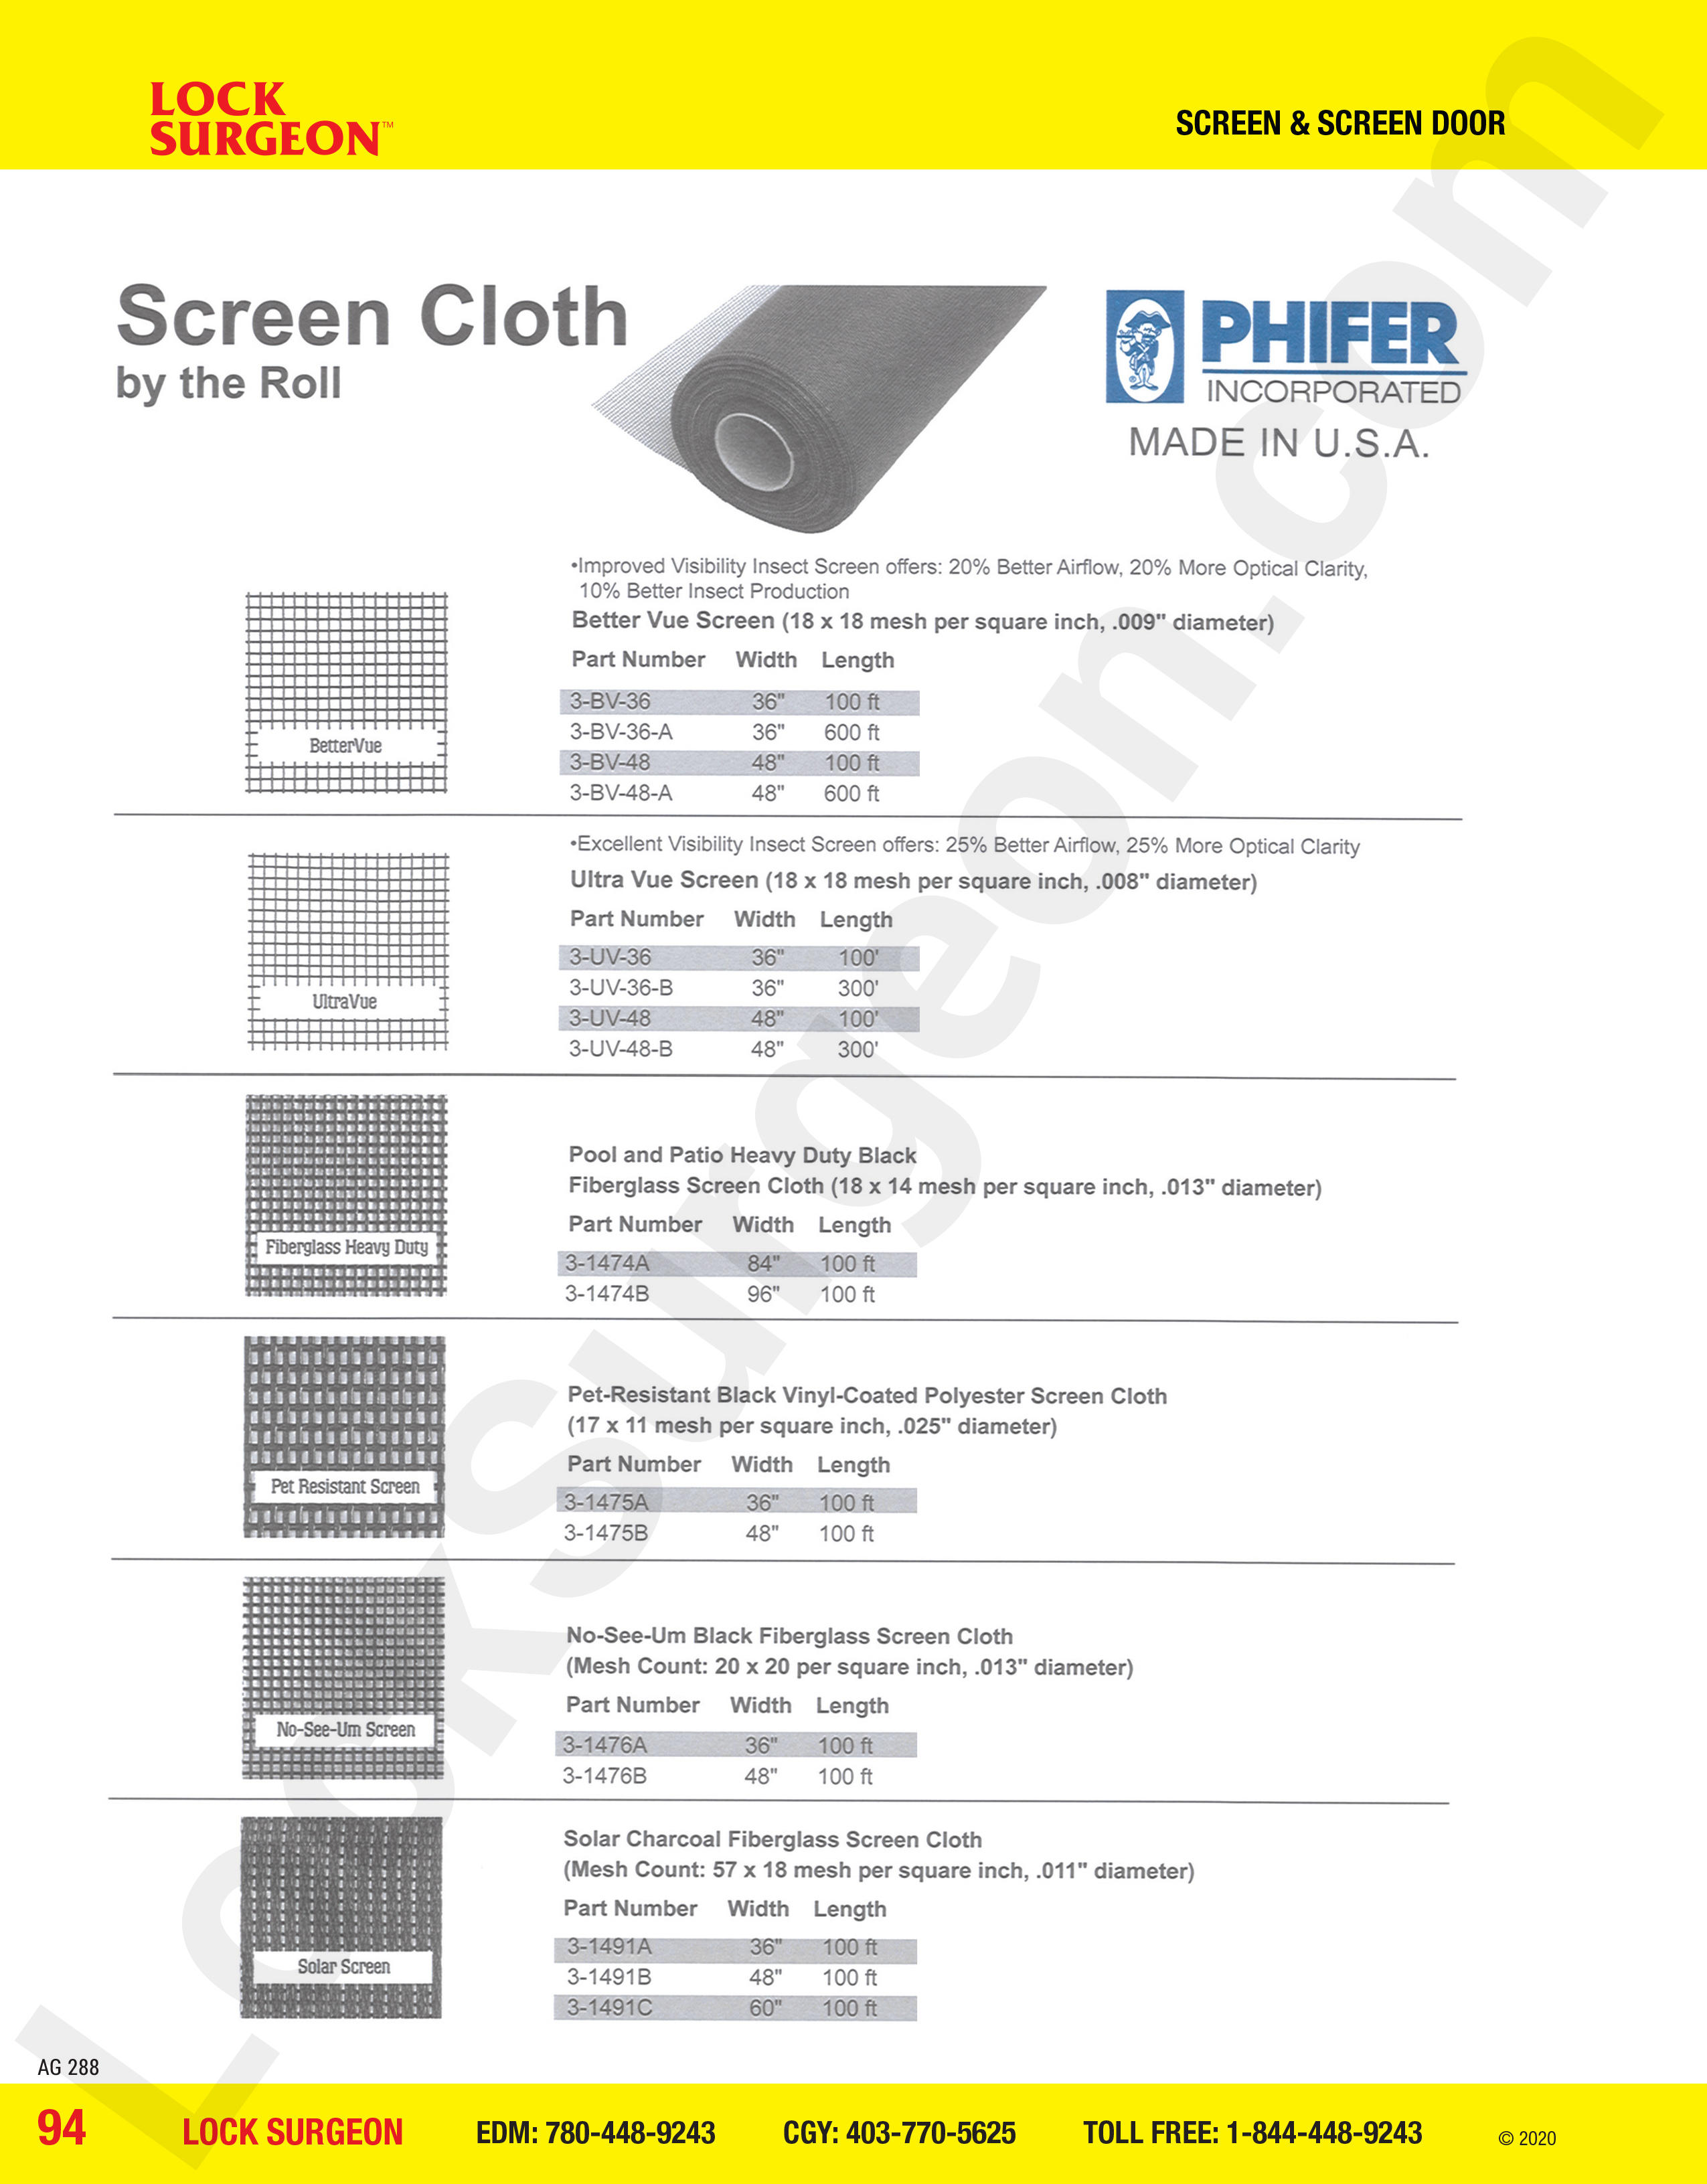 Cochrane Screen and Screen Door phifer screen cloth rolls